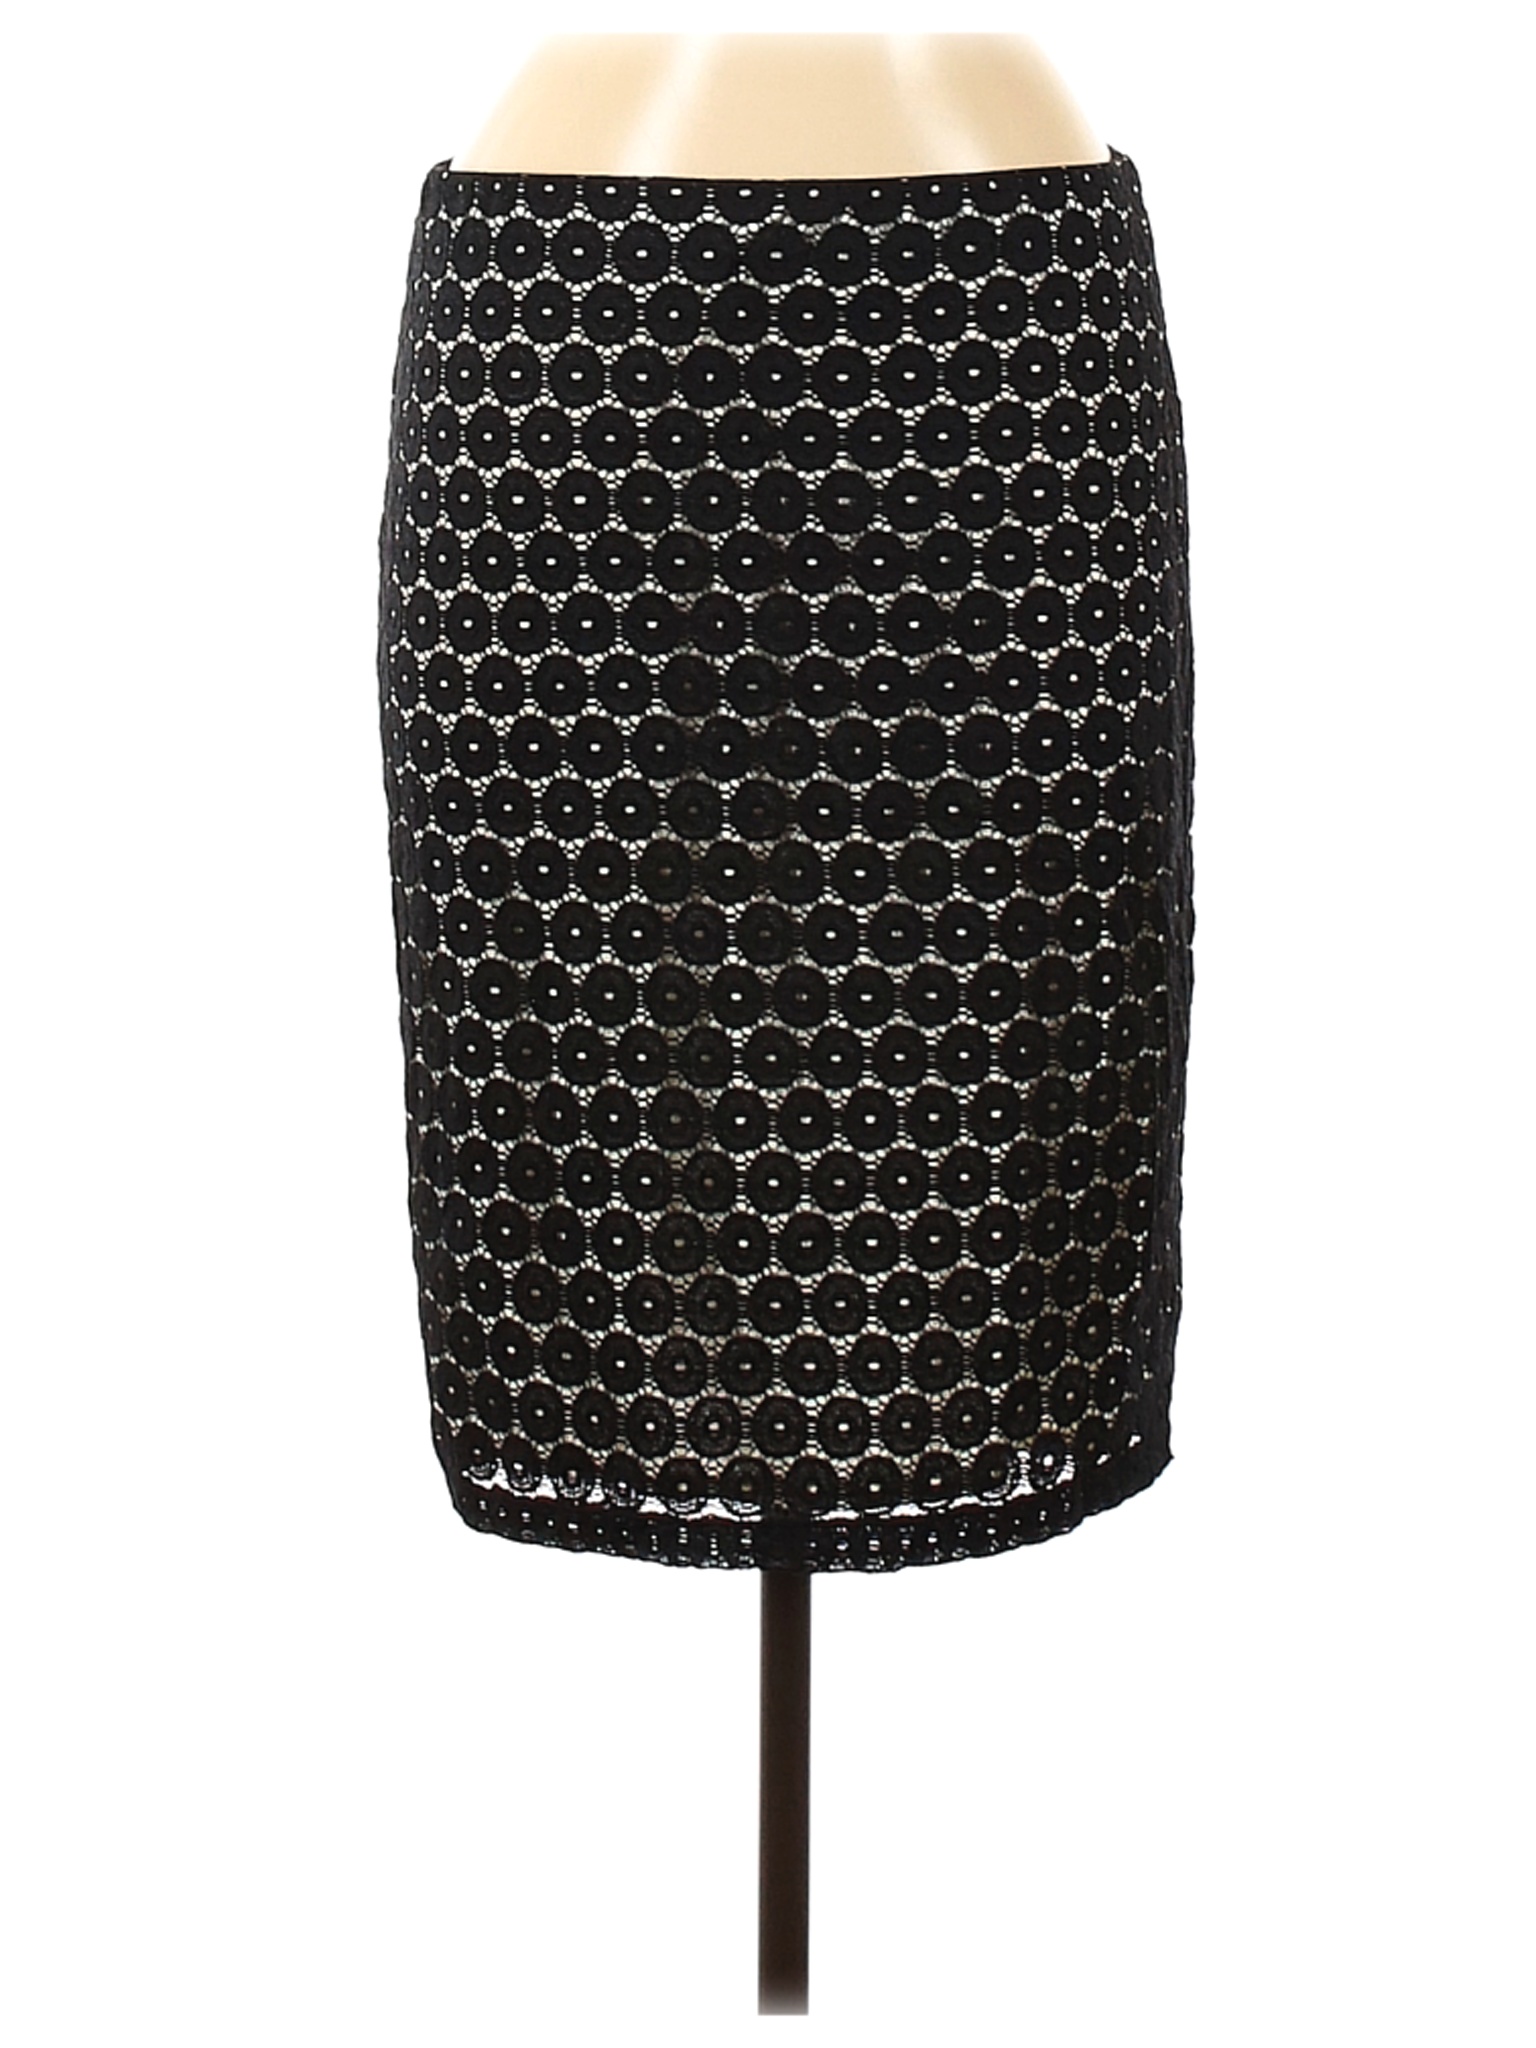 NWT Max Studio Women Black Casual Skirt M | eBay